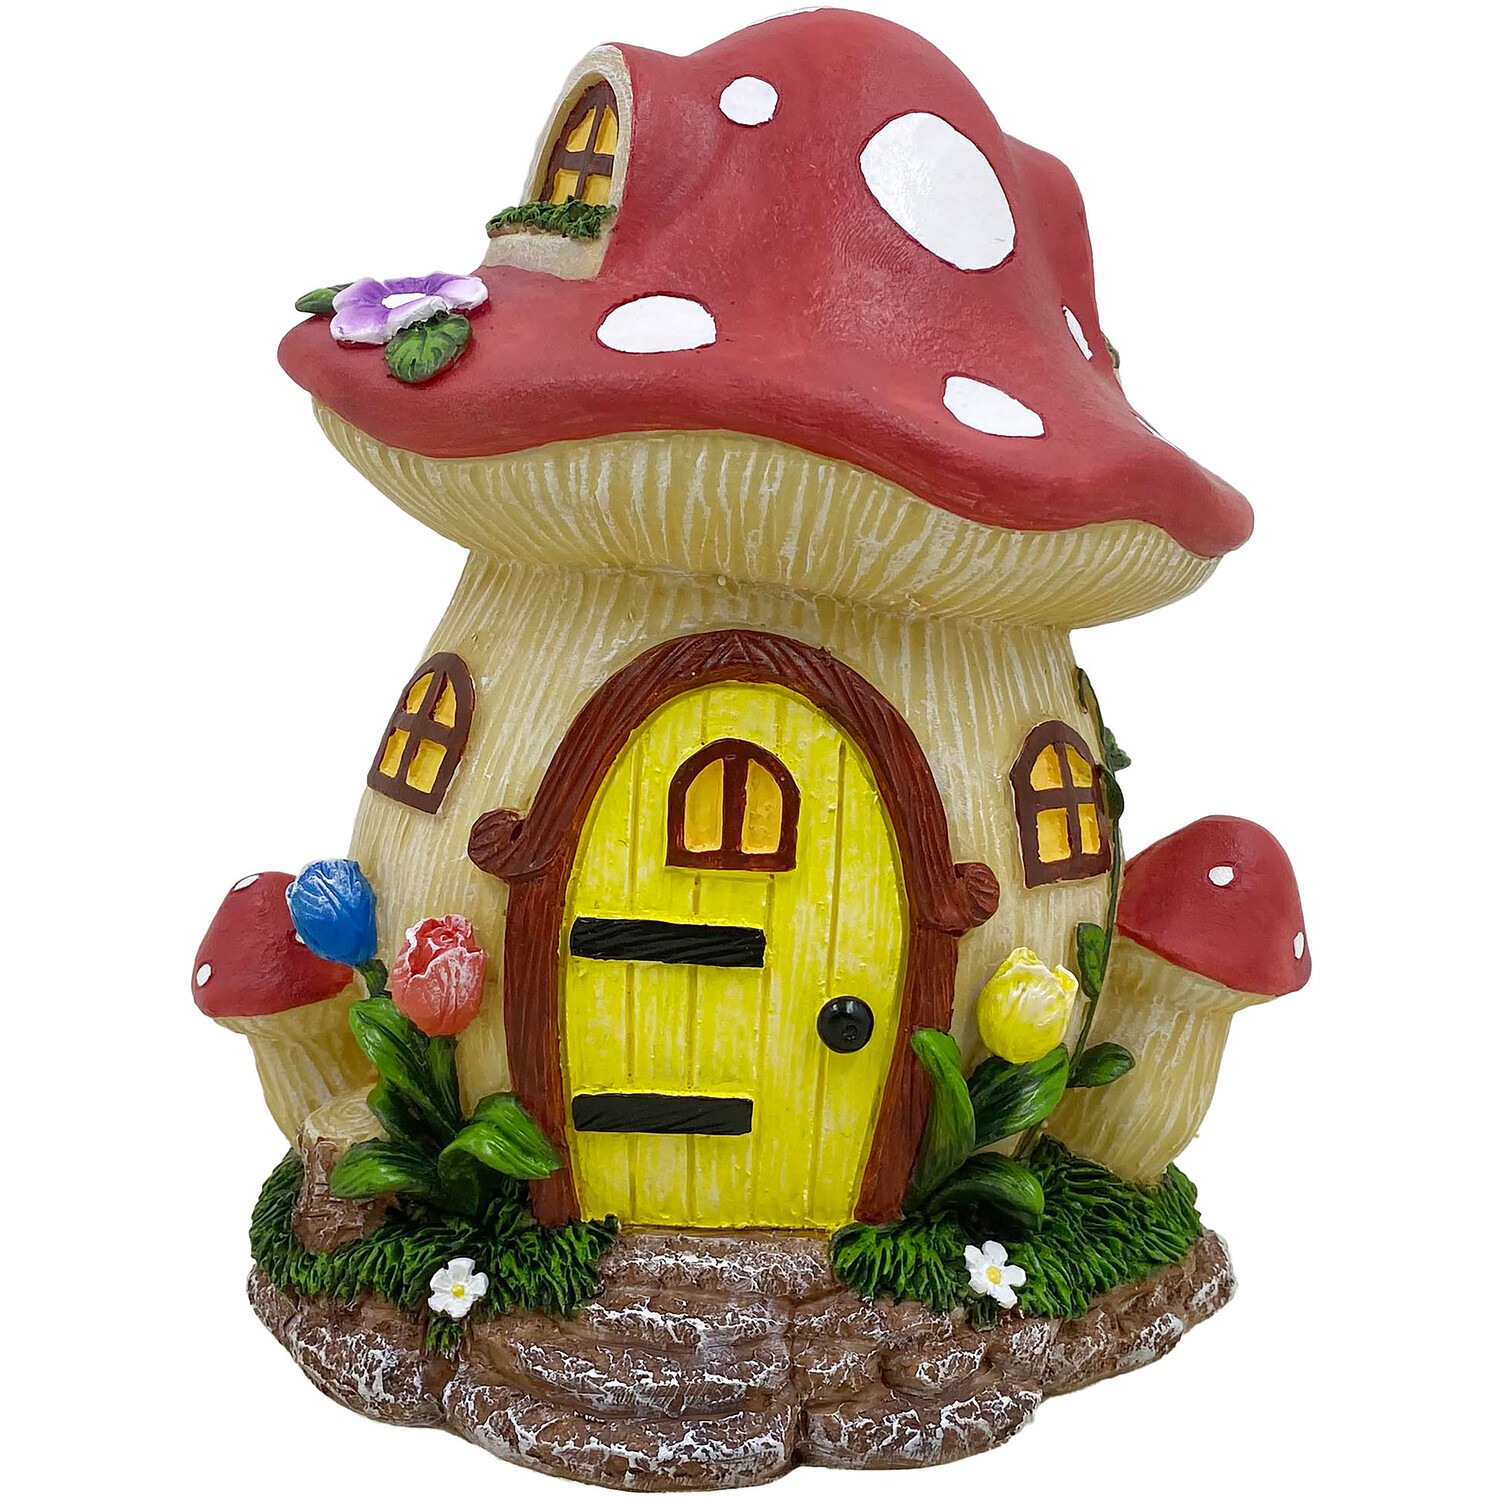 Red Mushroom House Ornament Image